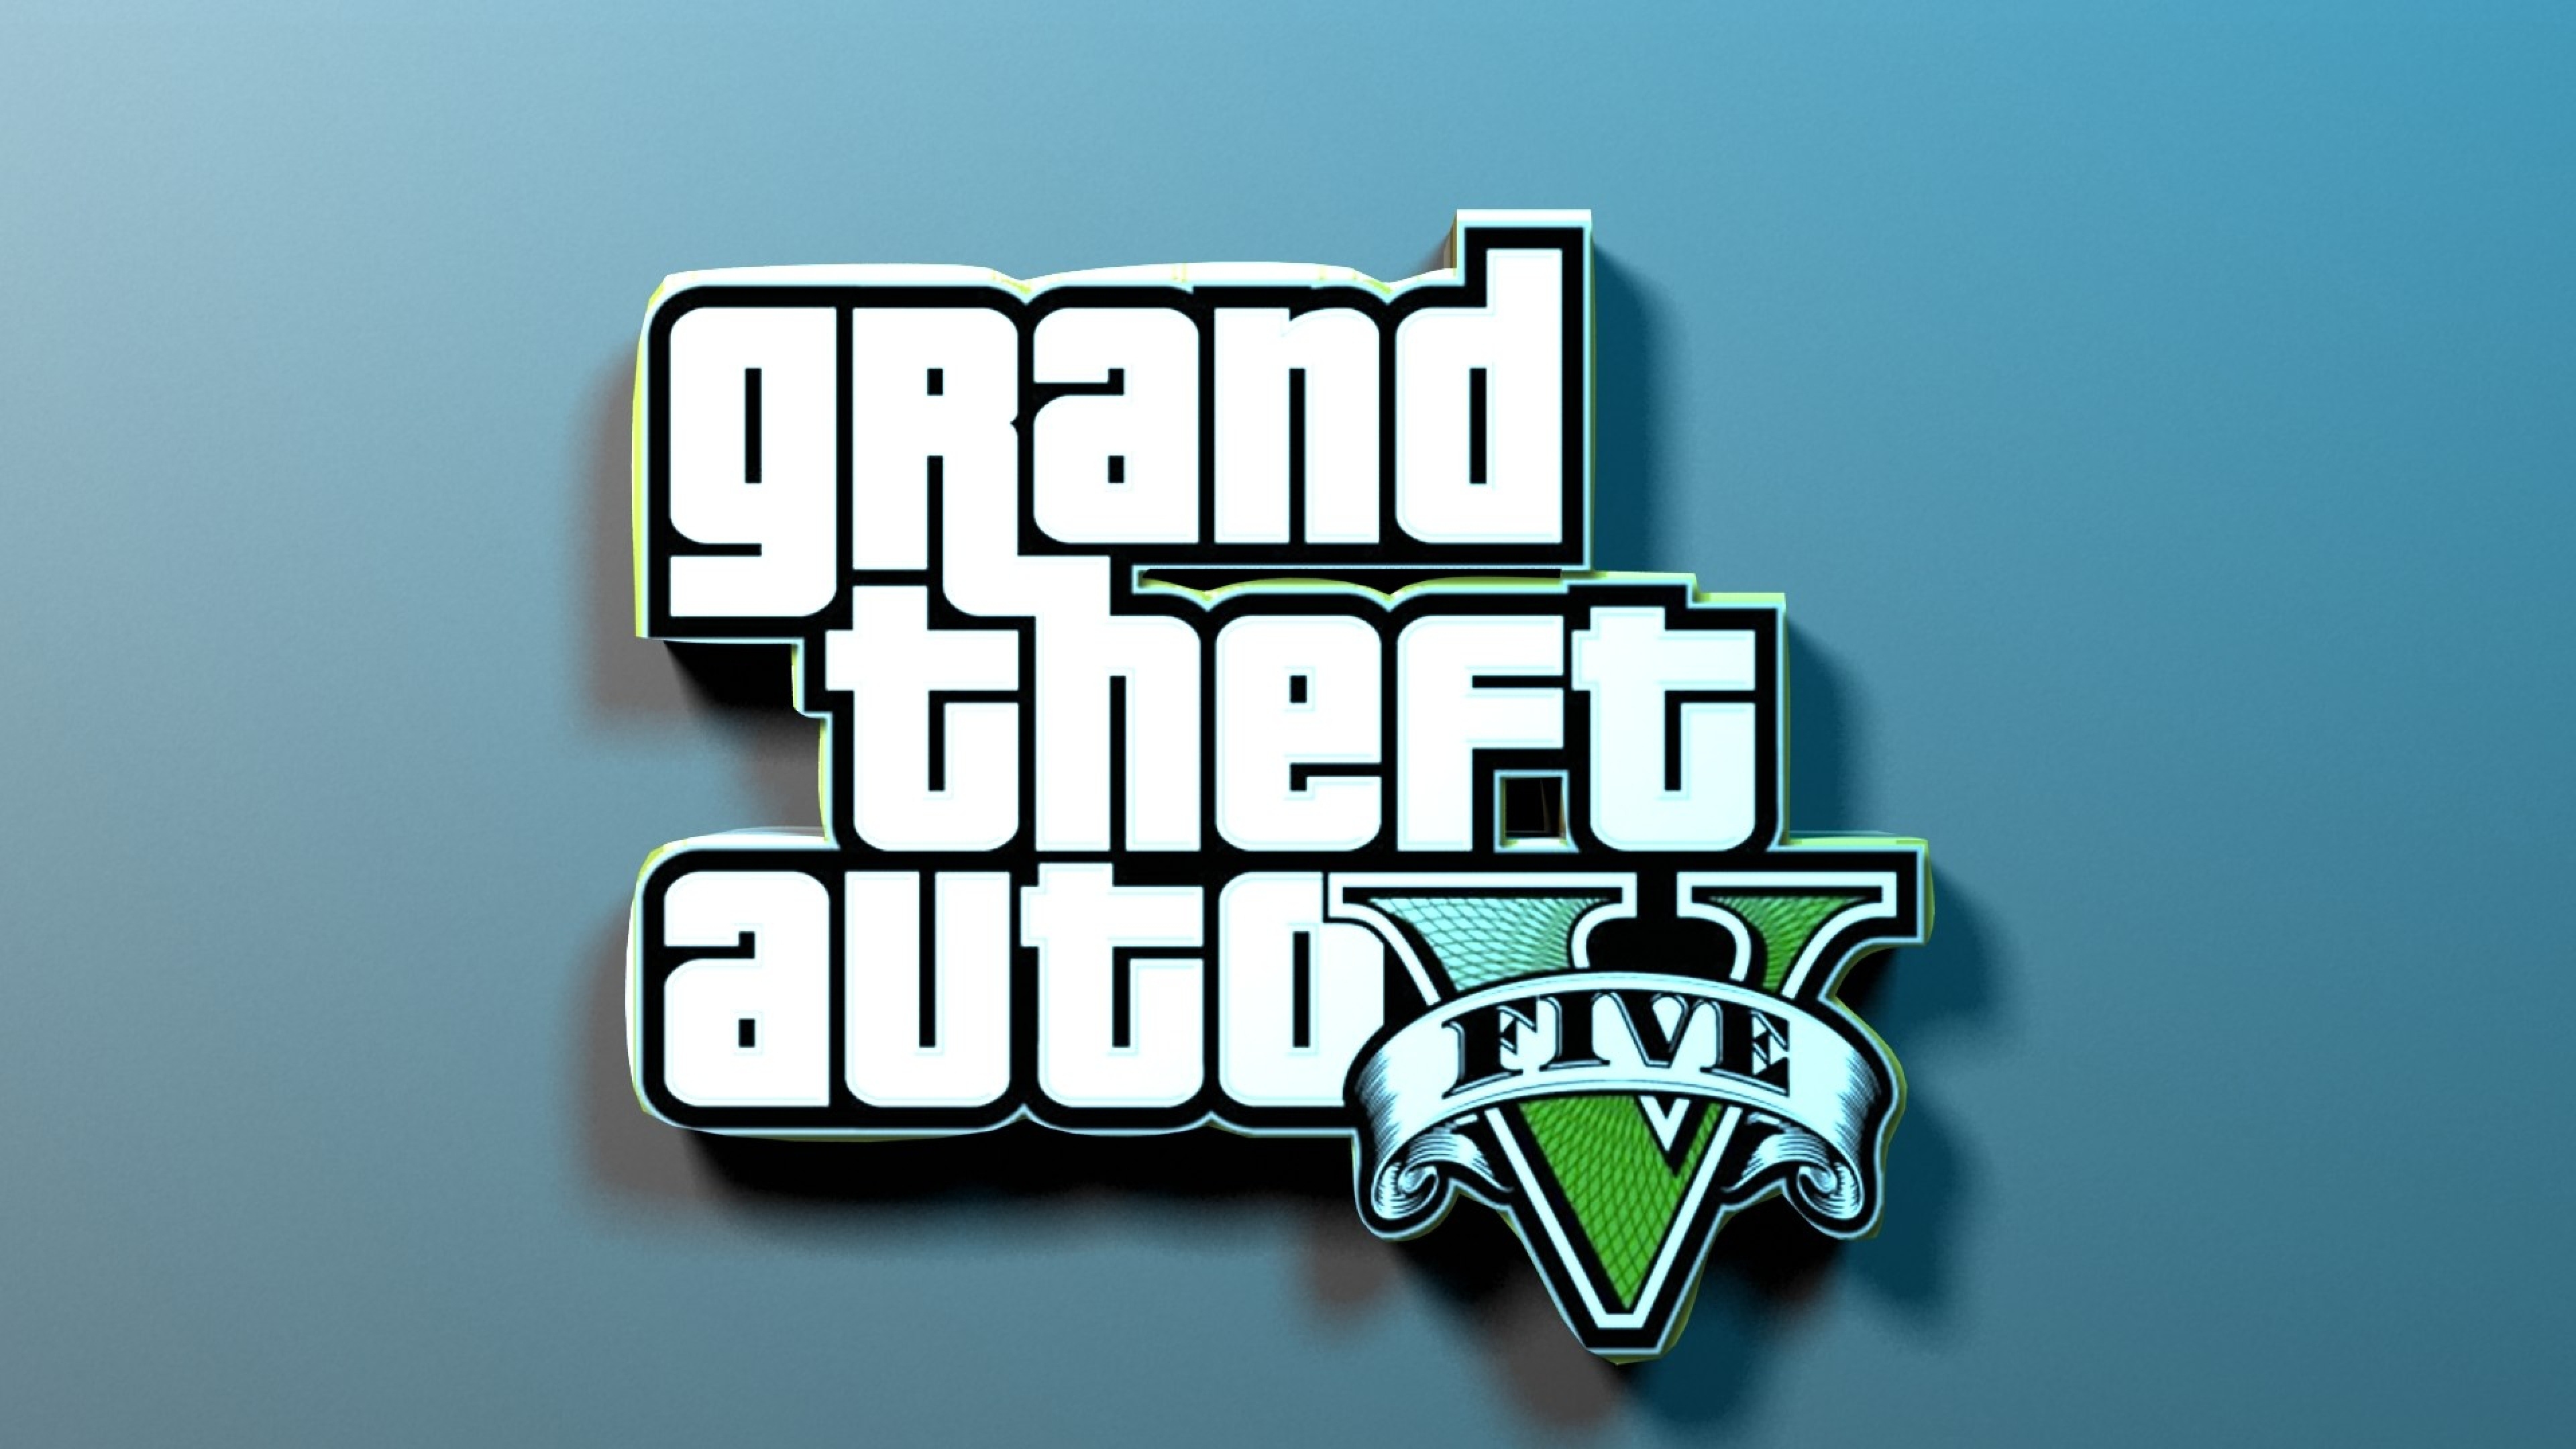 Grand Theft Auto V Background